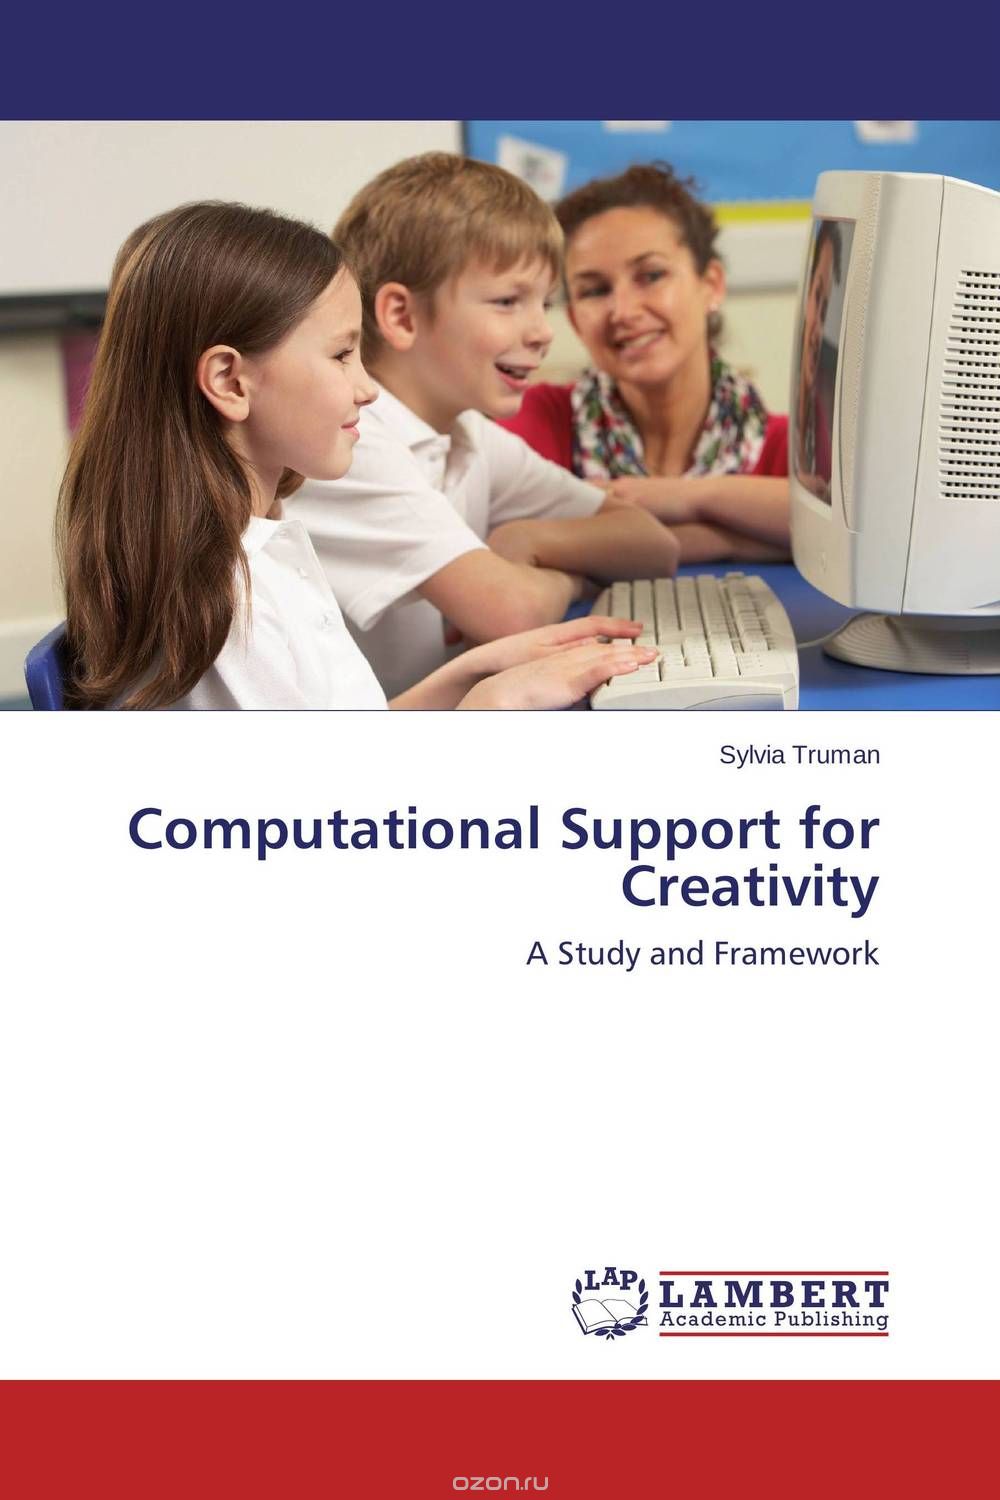 Скачать книгу "Computational Support for Creativity"